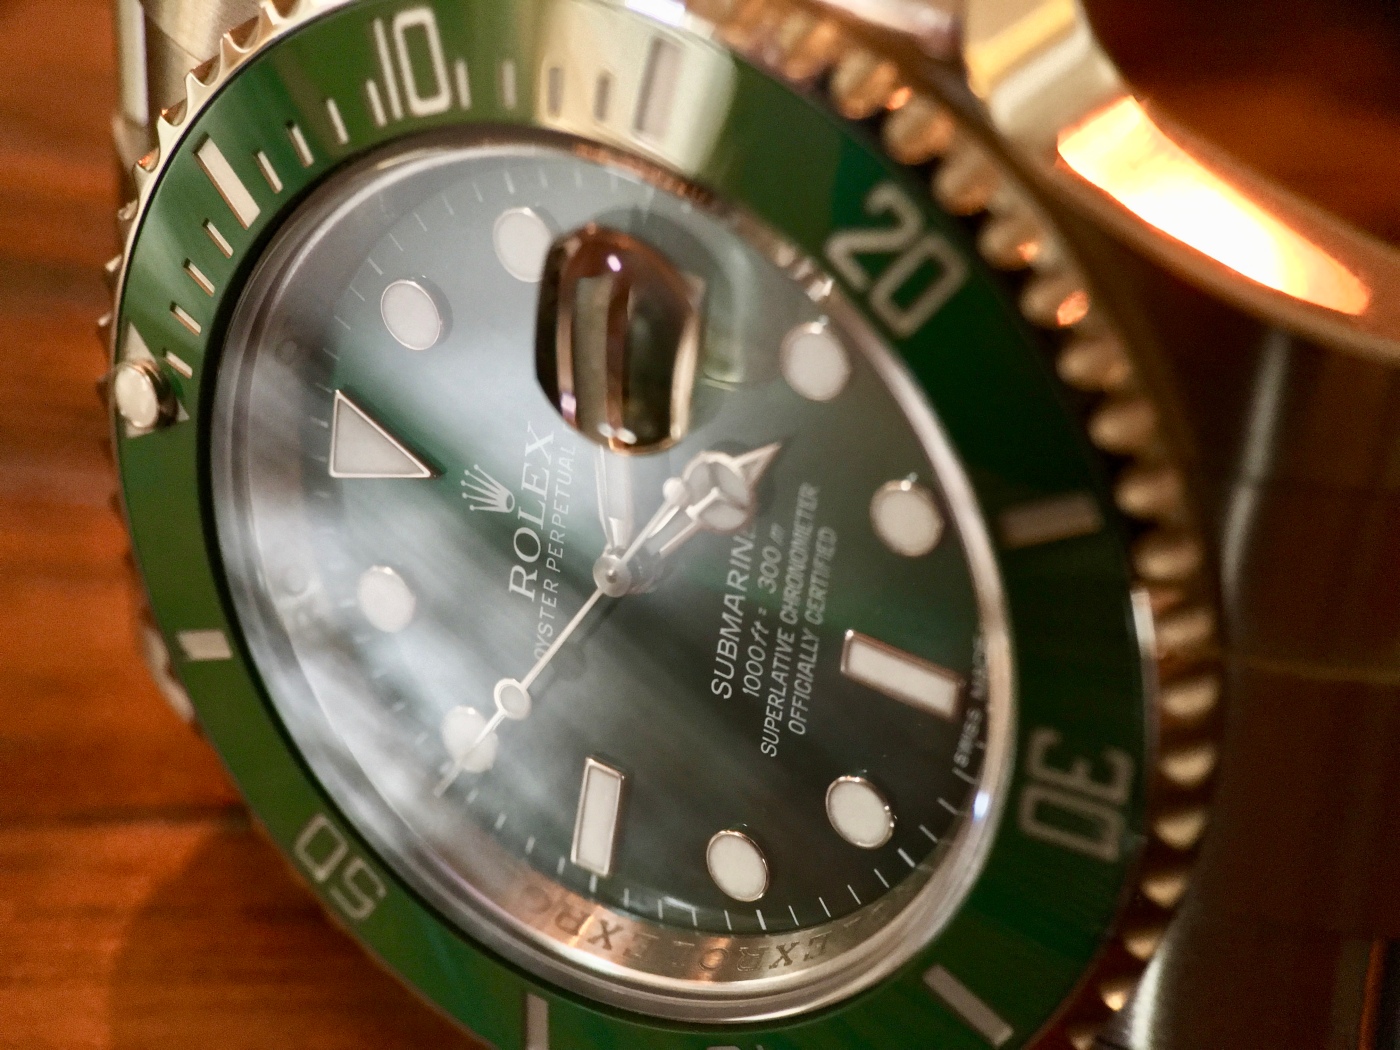 The Wrist Watcher - That green never stops amazing me 💚 #Mesmerizing #Rolex  #Submariner #116610LV #Hulk #LVC #Thewristwatcher #WatchLover #RolexWrist  #WristPorn #Watchporn #WatchAddict #WatchLovers #WatchoftheDay #DailyWatch  #WatchCollector